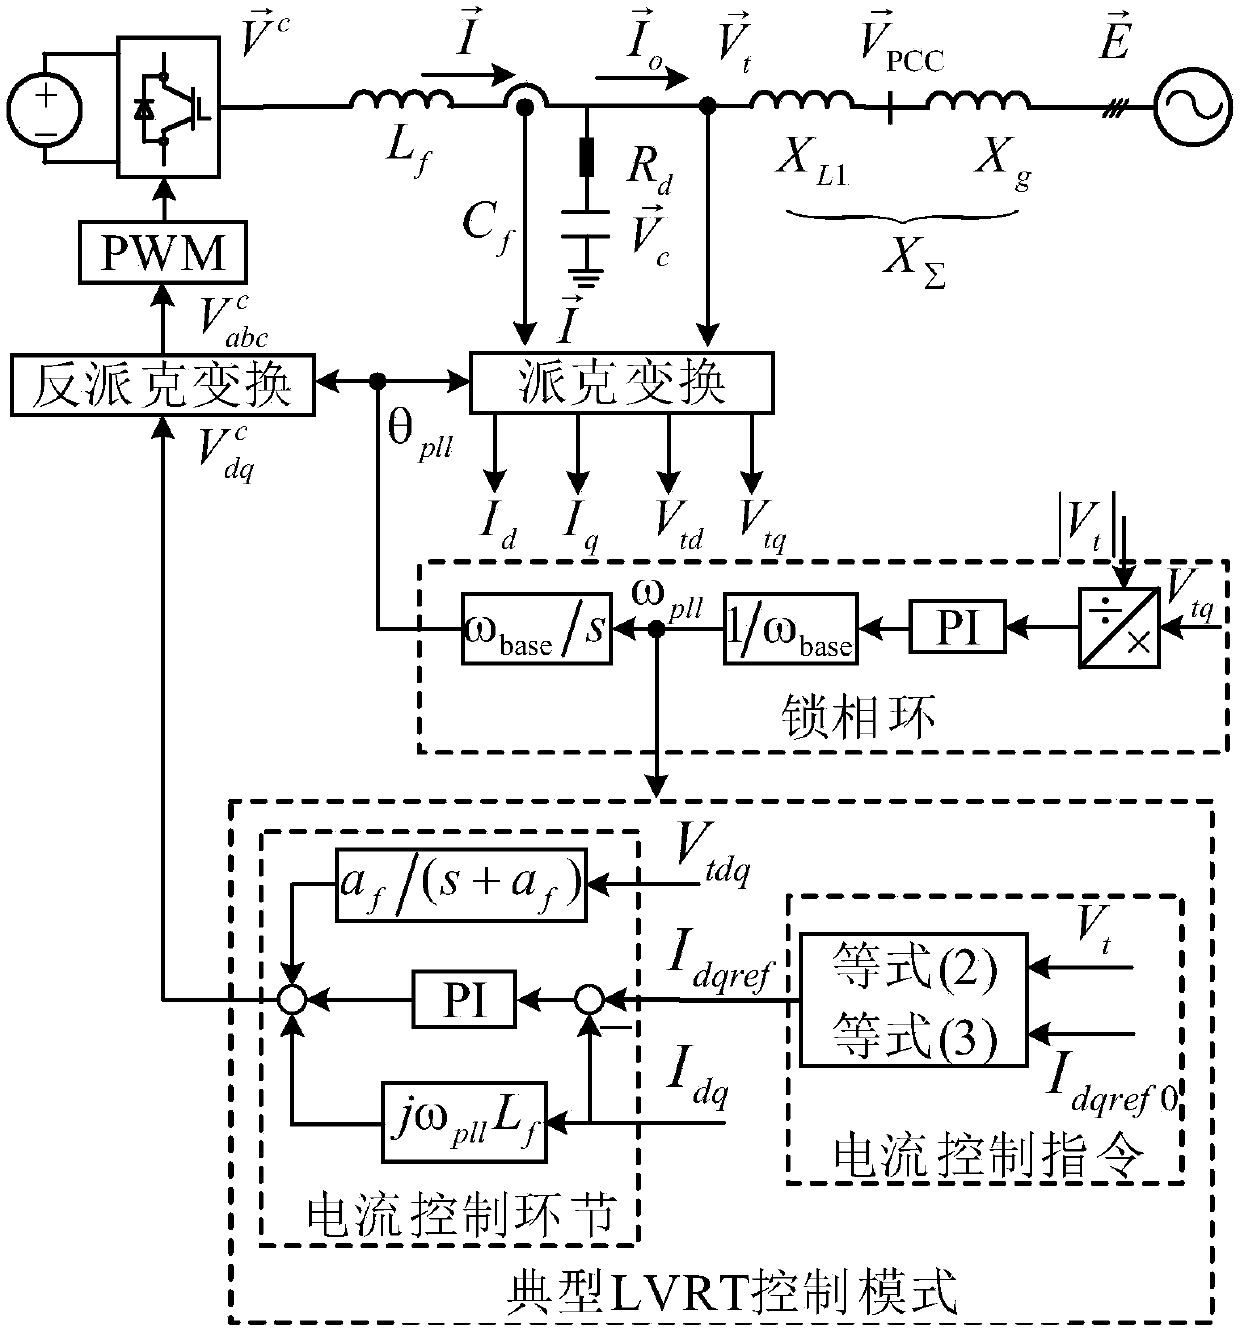 Inverter low voltage riding-through control method for weak network far-end severe voltage failure